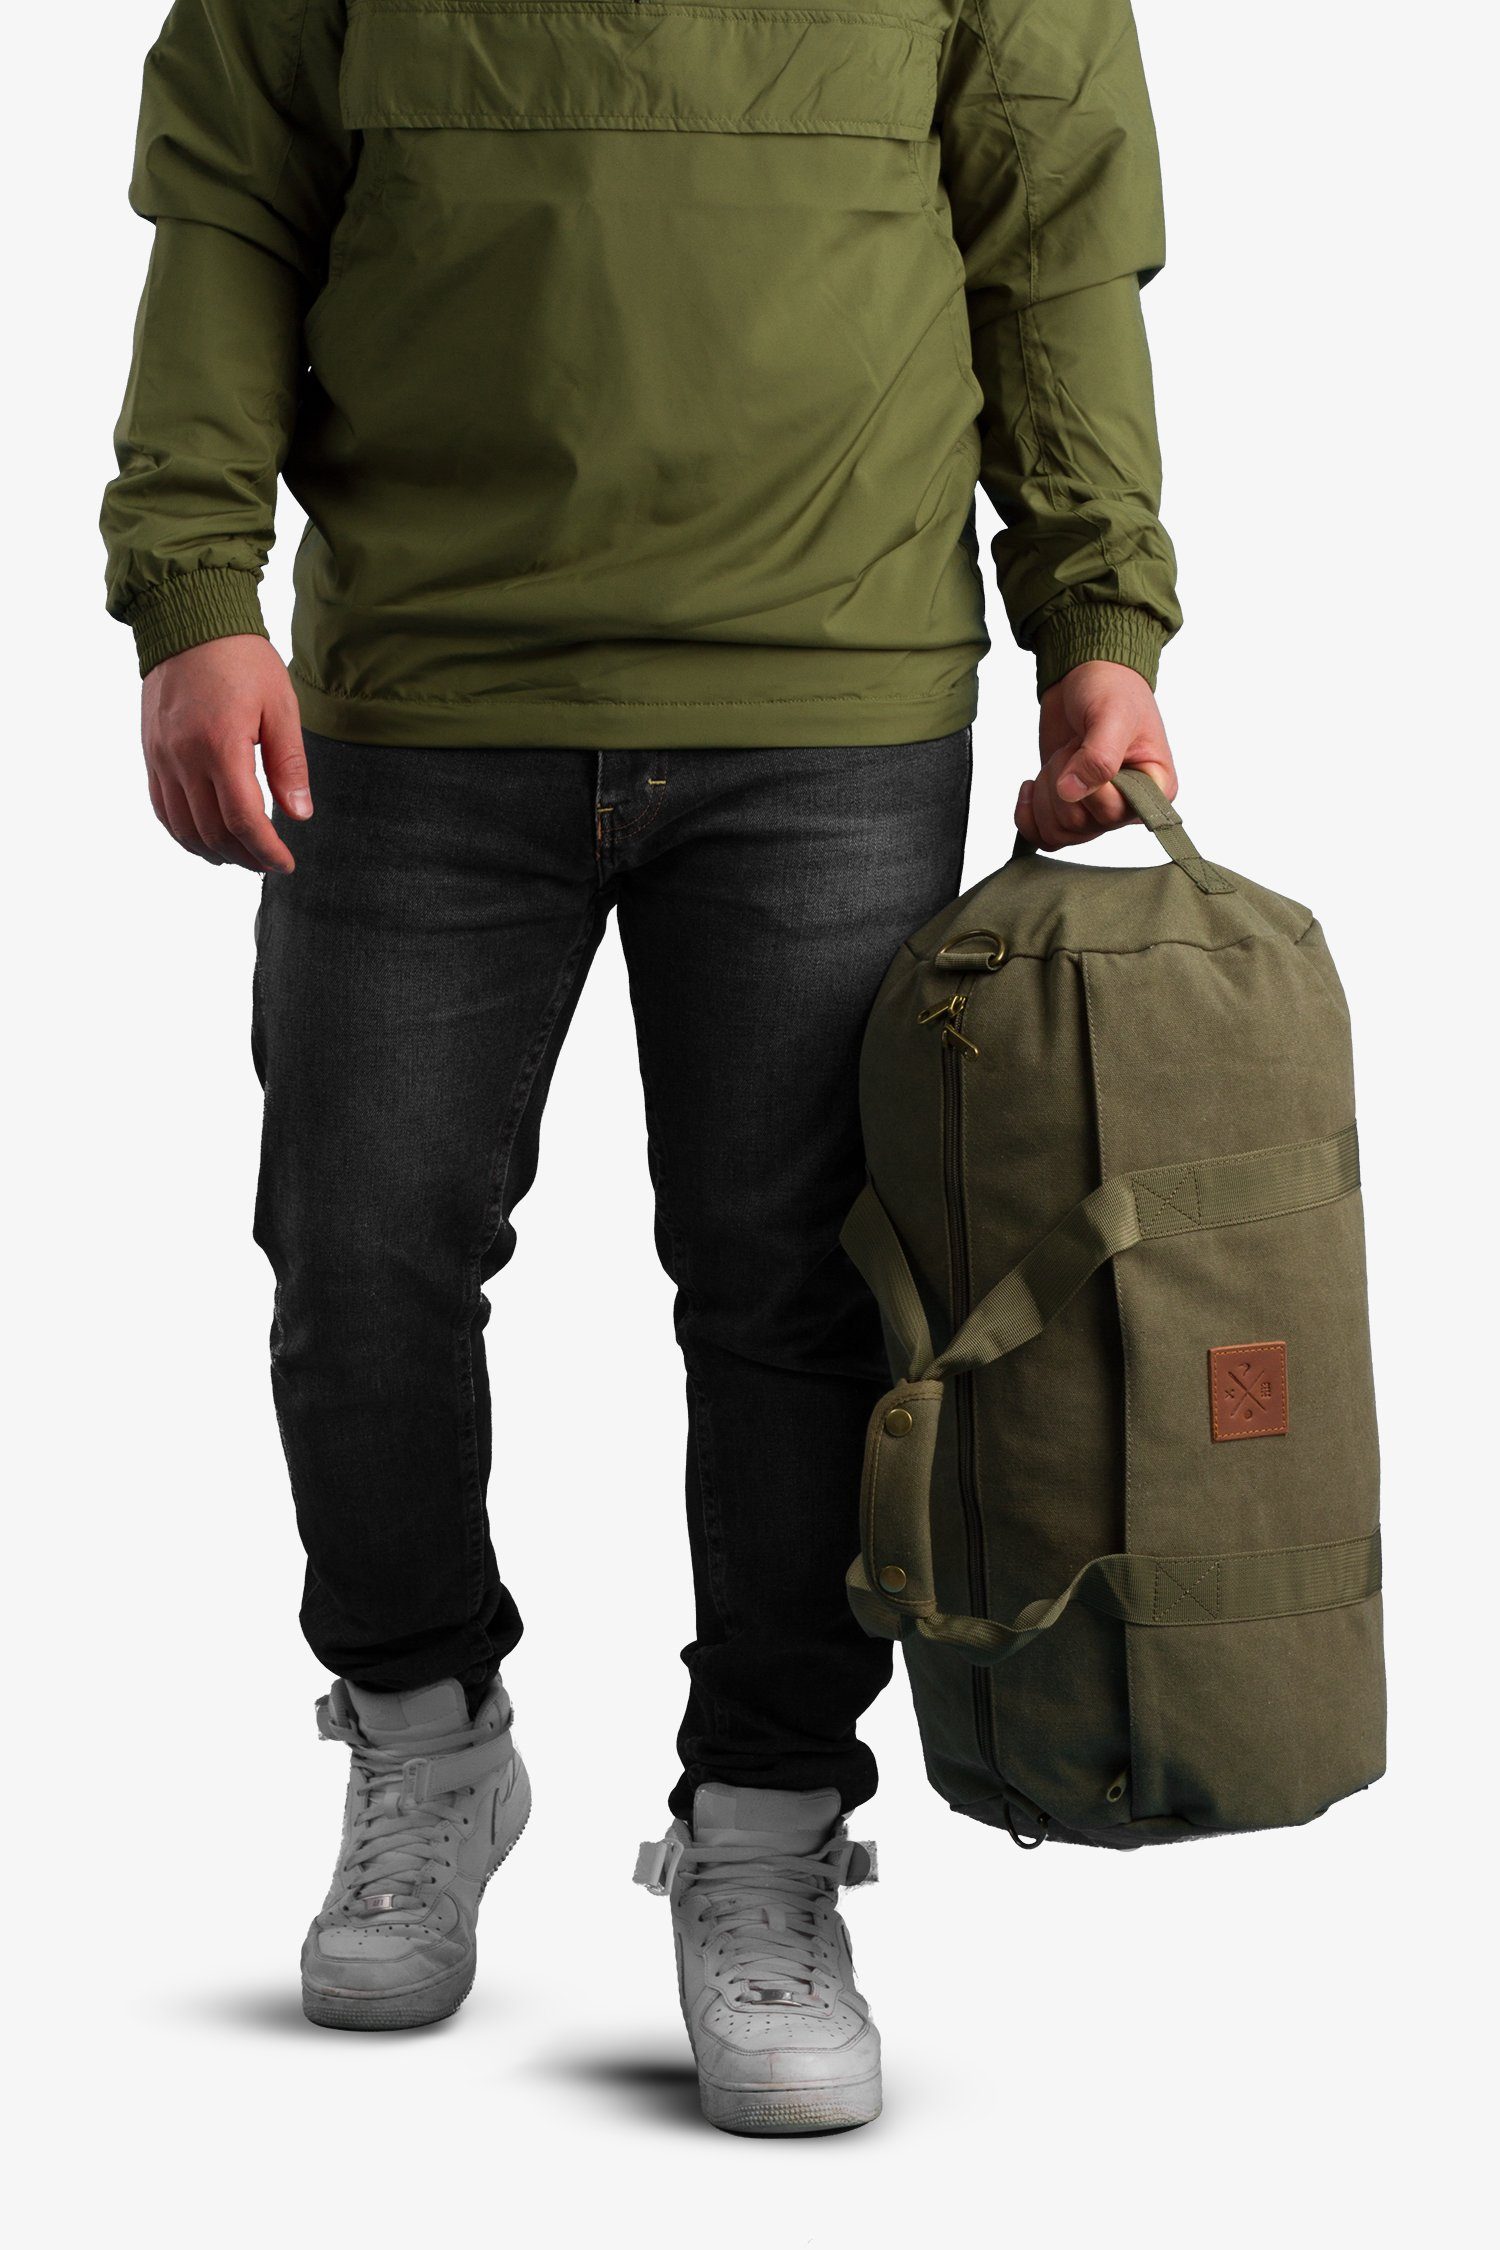 Barrel 24L Canvas Duffel Bag, Sporttasche Bag Olive/Khaki Fassungsvermögen - Sporttasche, Manufaktur13